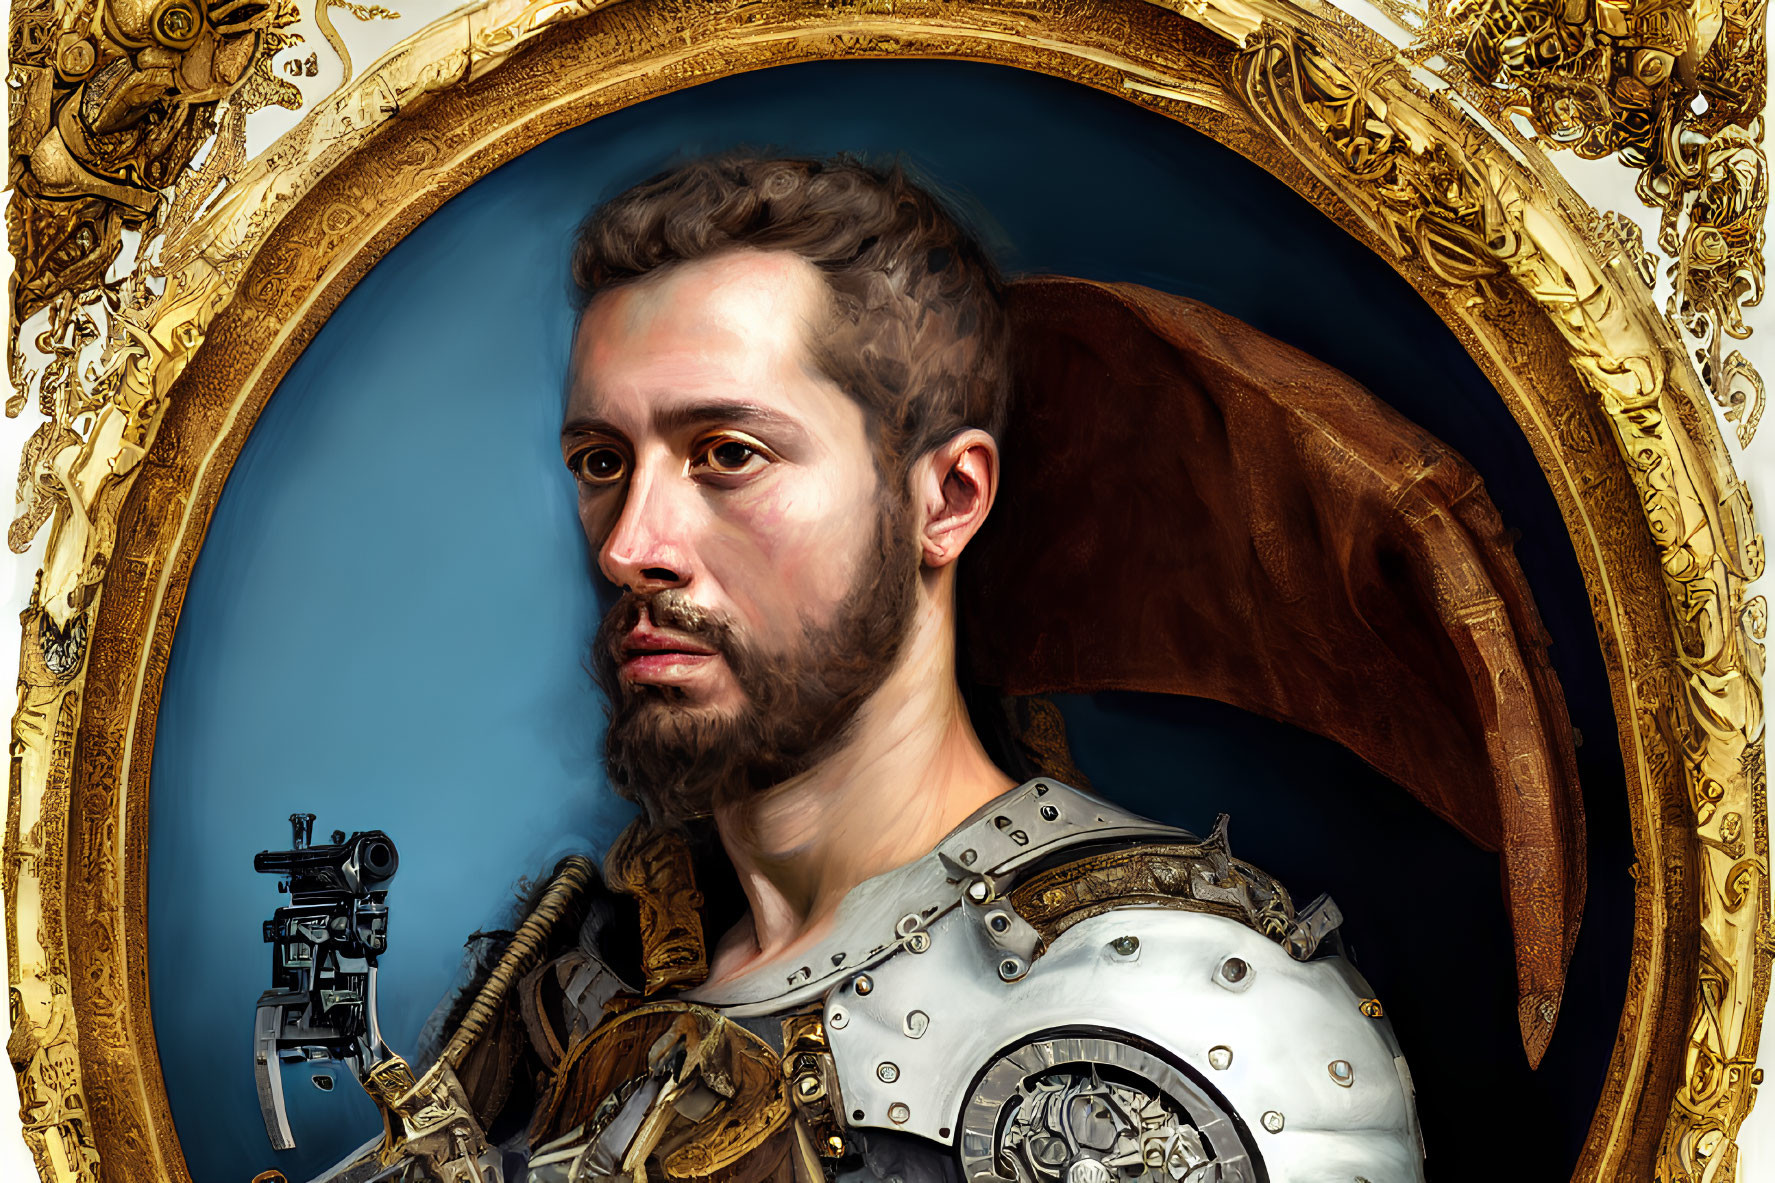 Futuristic armor portrait of a bearded man in ornate golden frame